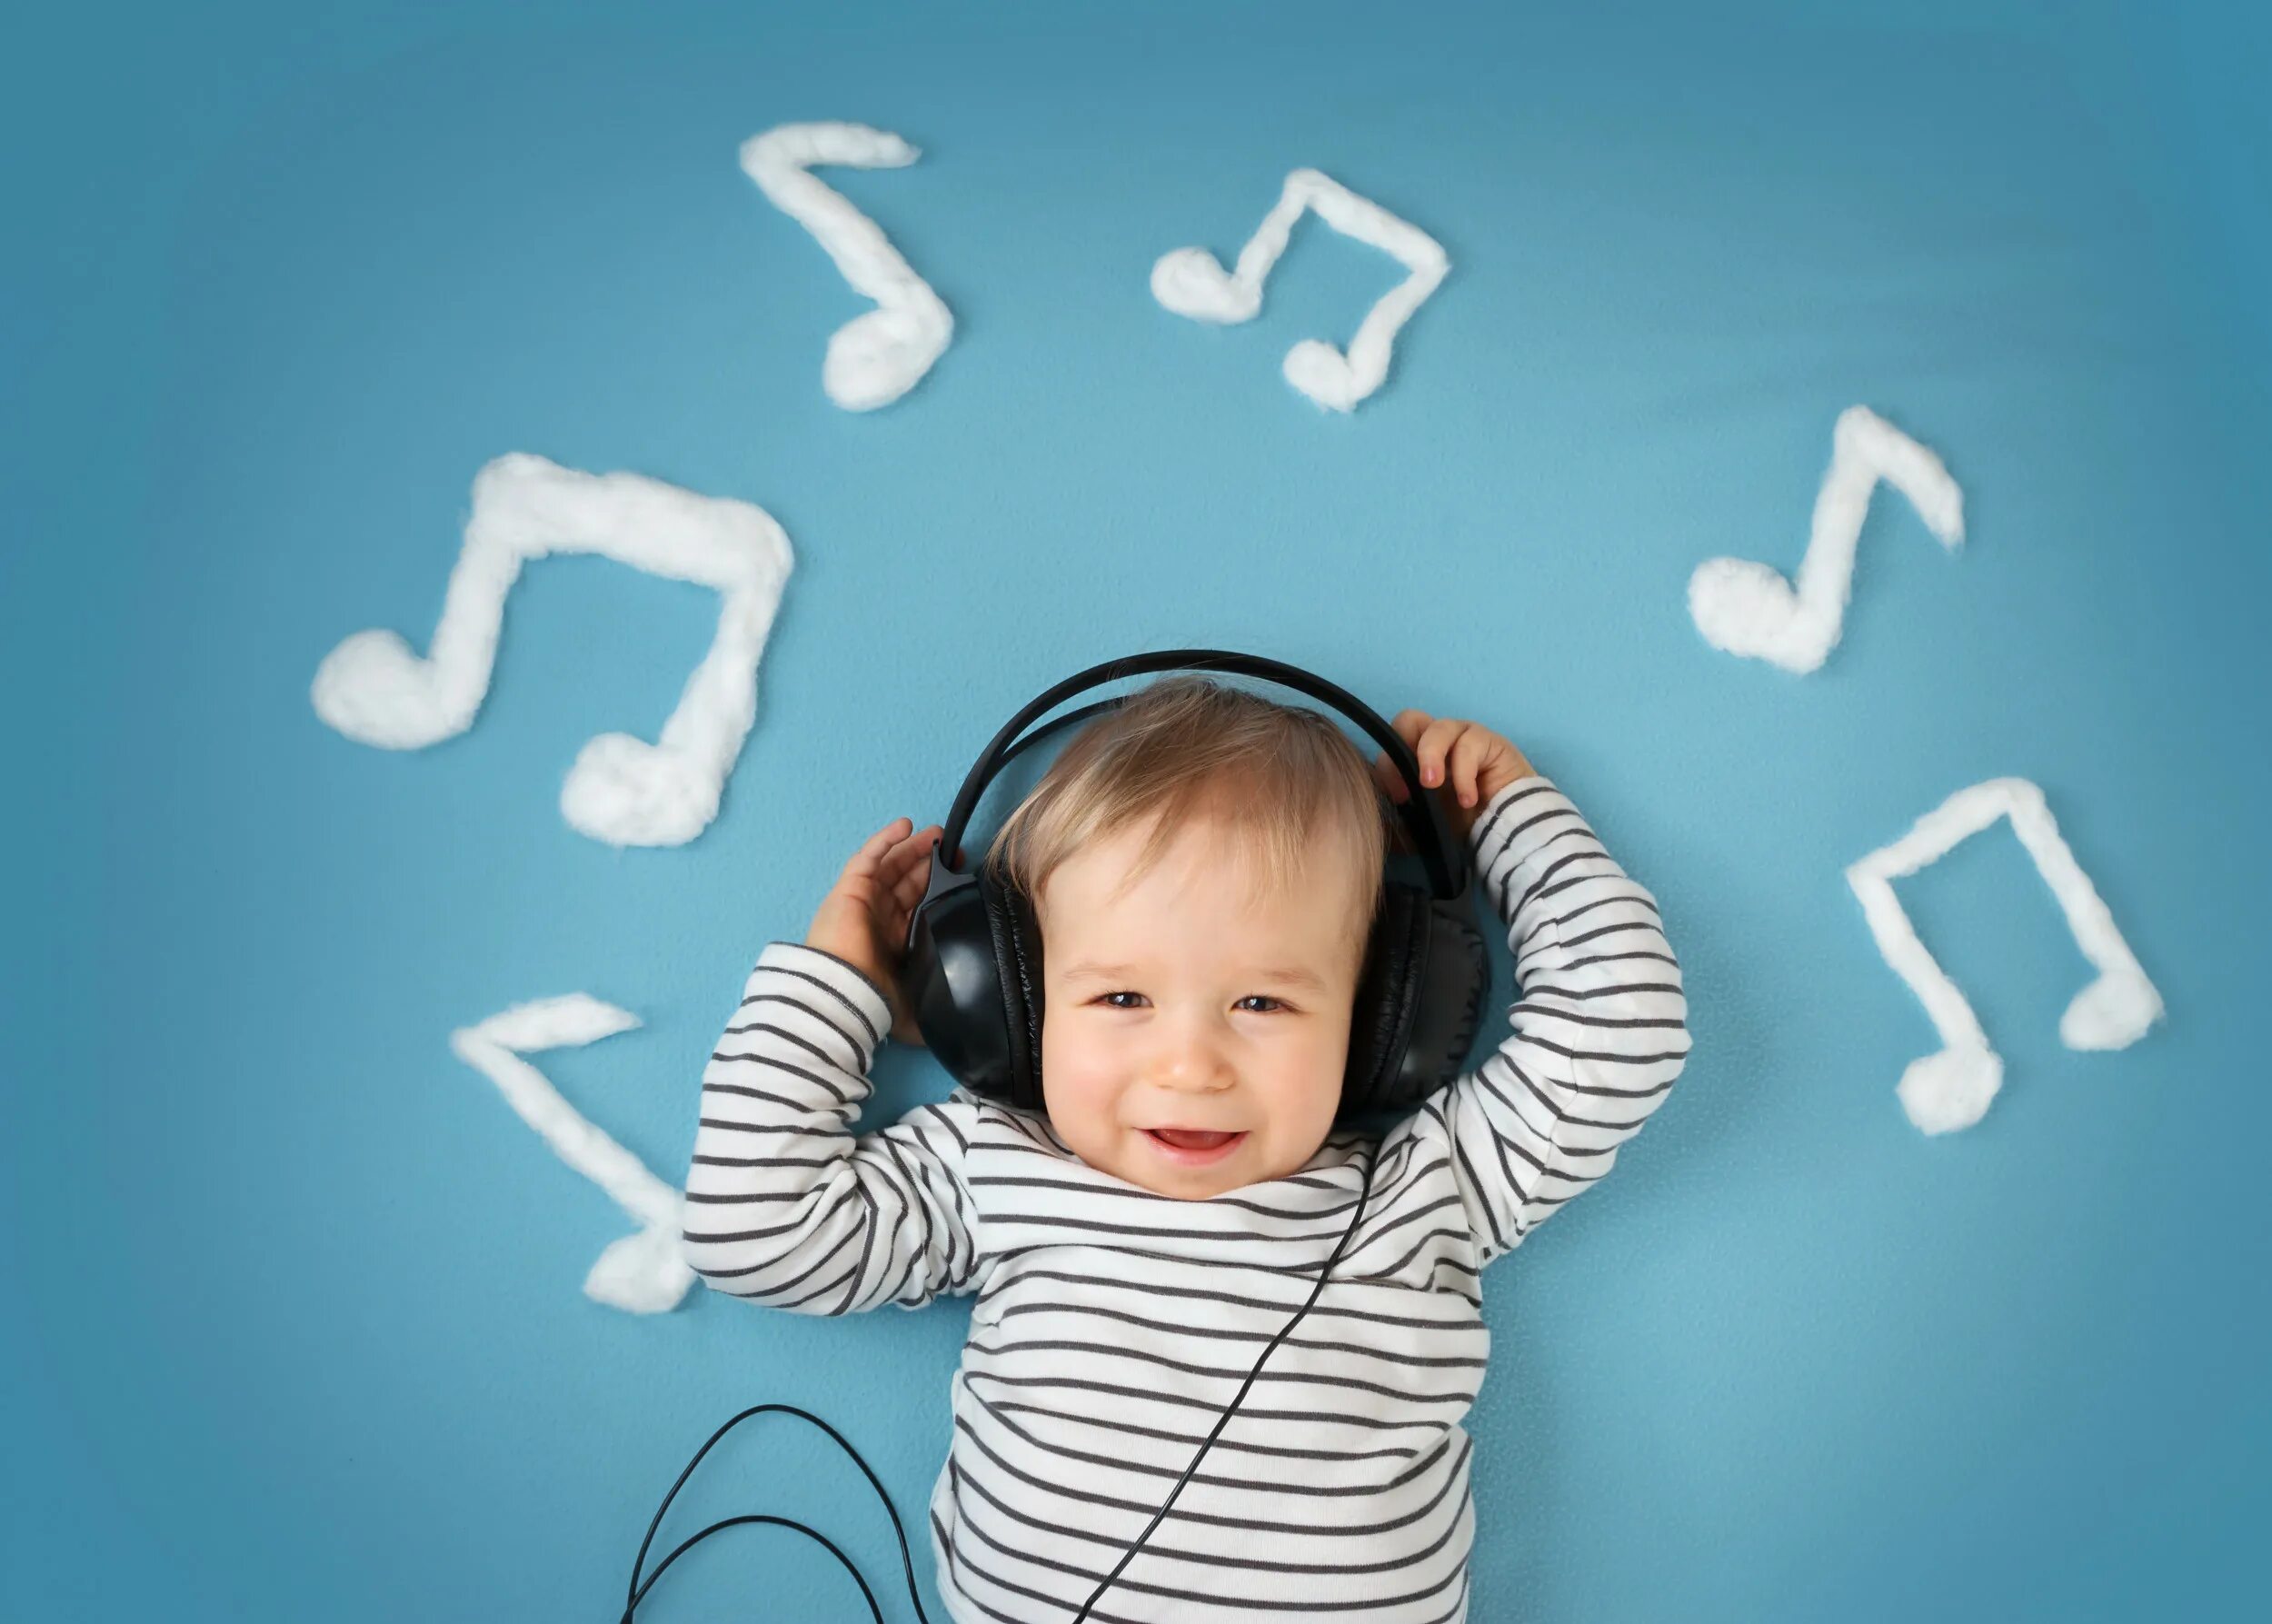 Бэйби музыка. Дети СЛУШАЮТ музыку. Ребёнок слушаетмузыку. Шум детей. Музыкальный слух.